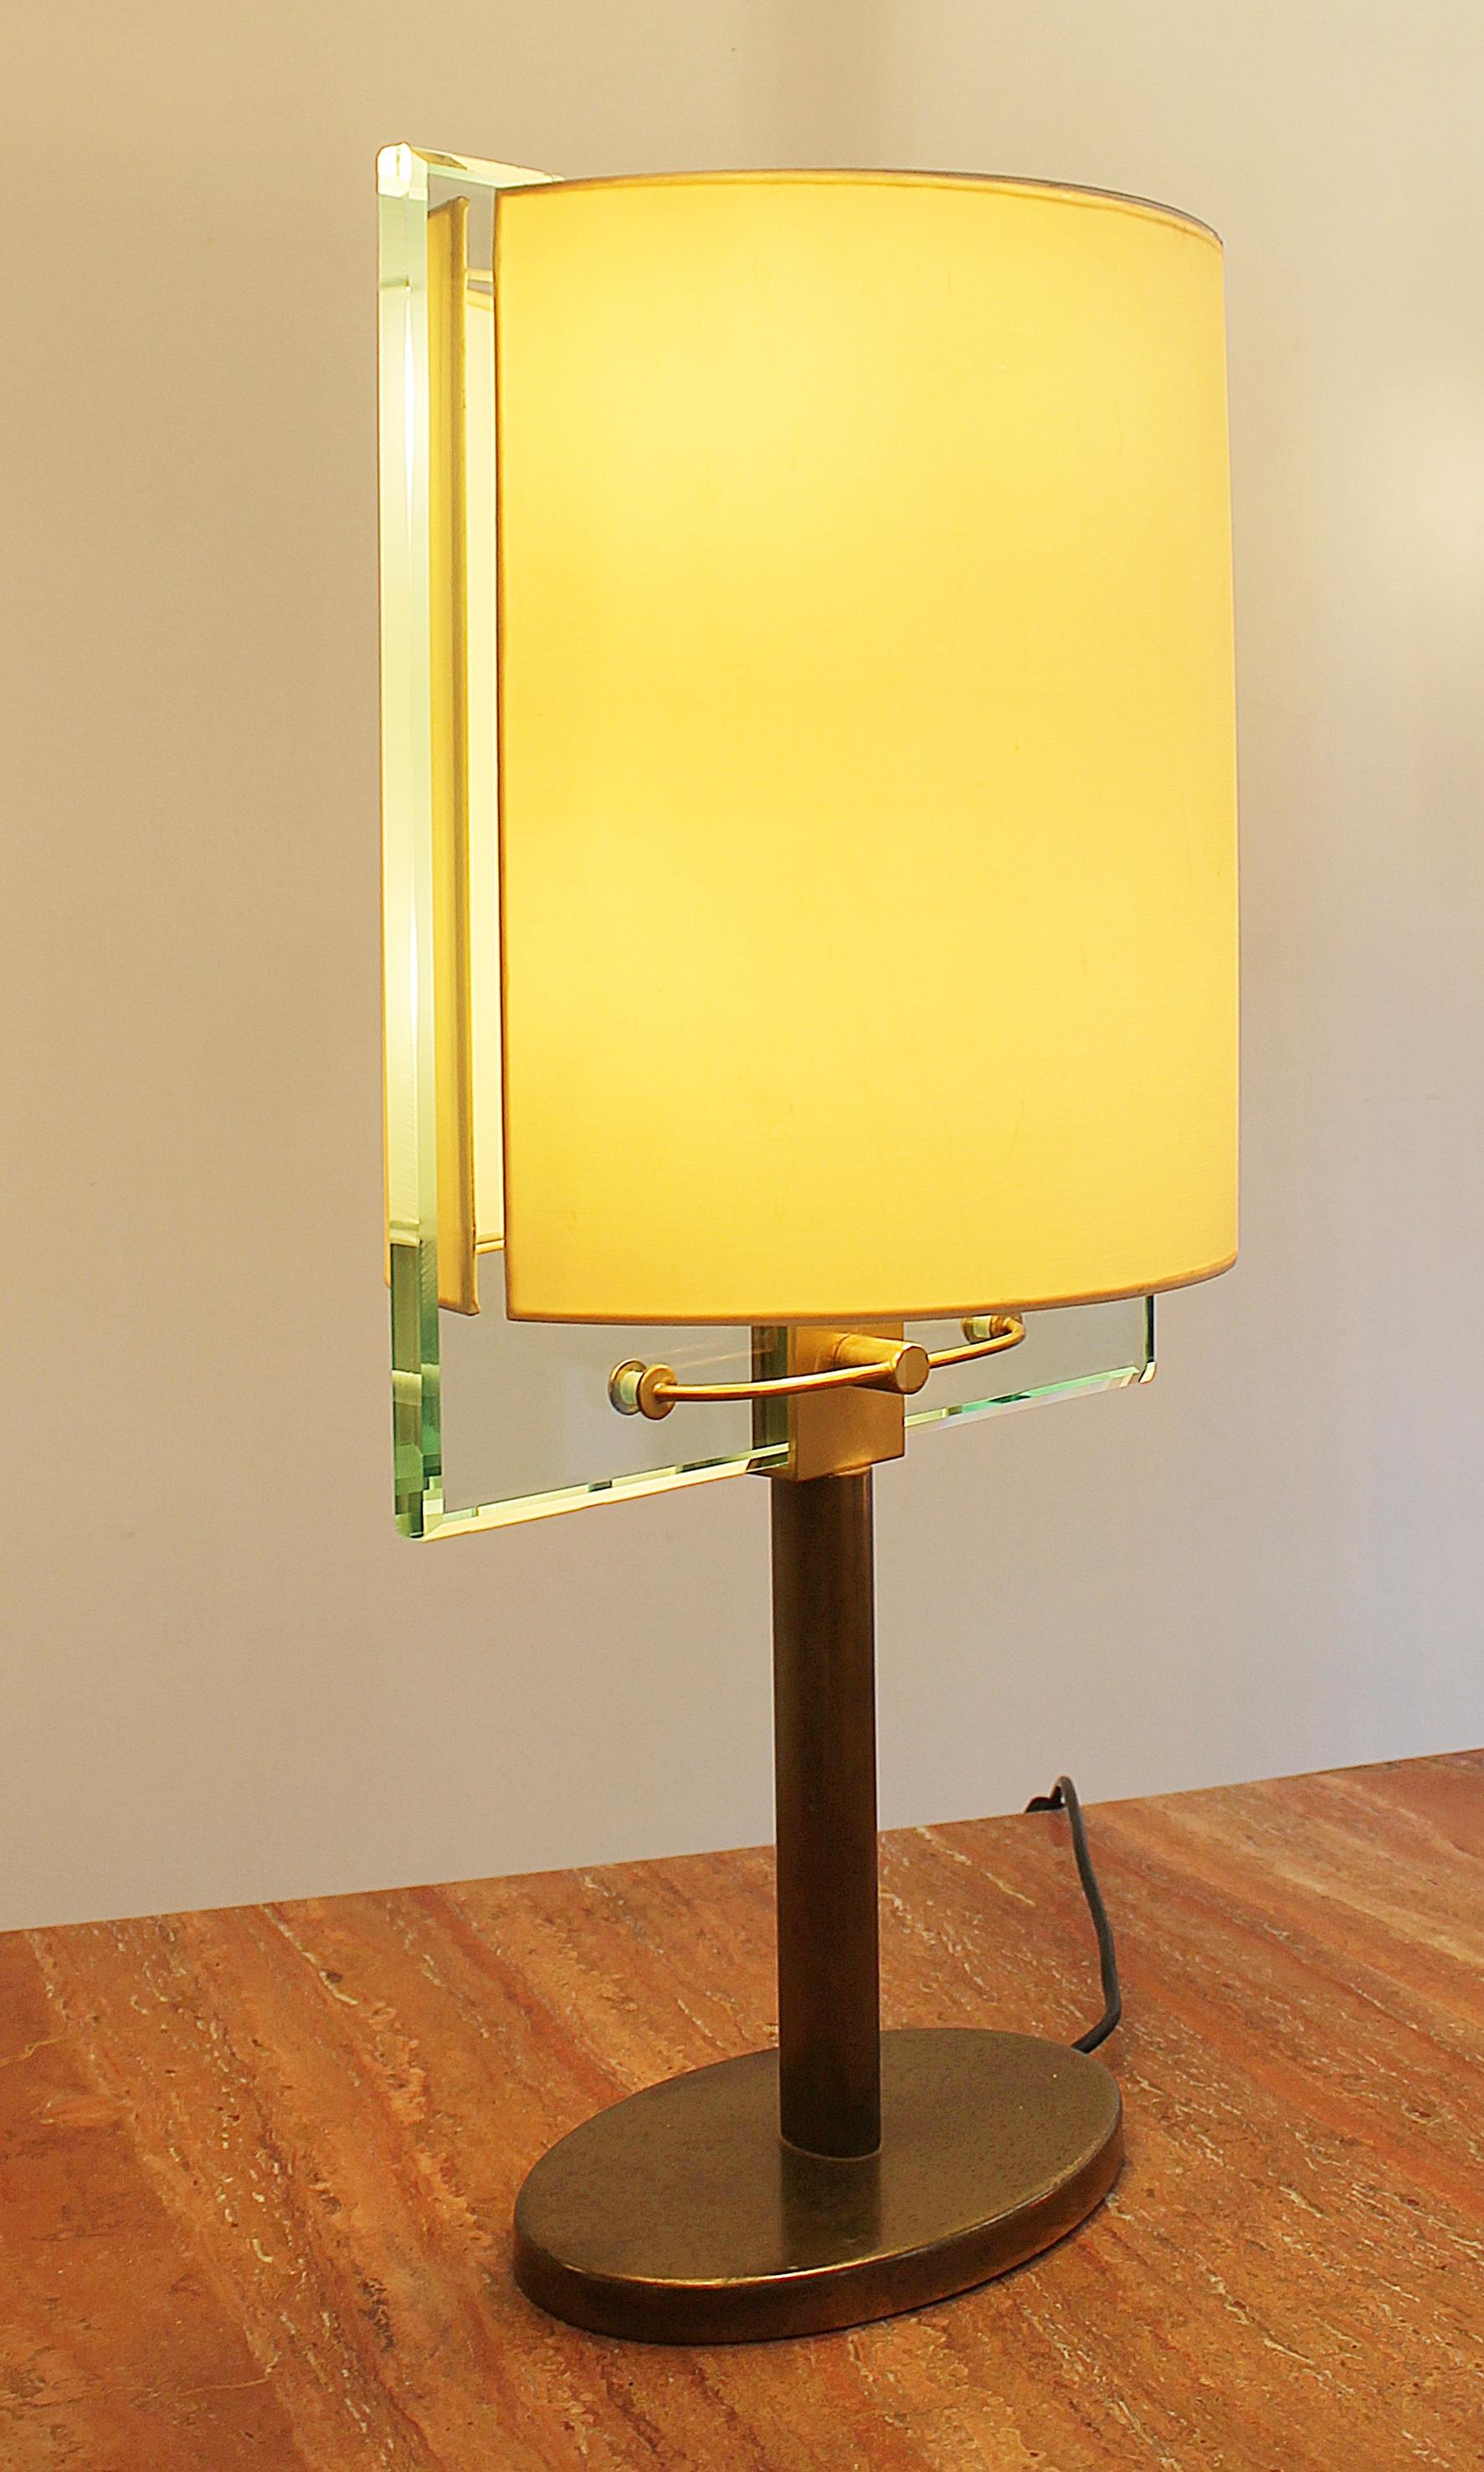 Table lamp model 2833 by Nathalie Grenon for Fontana Arte - 1990s.